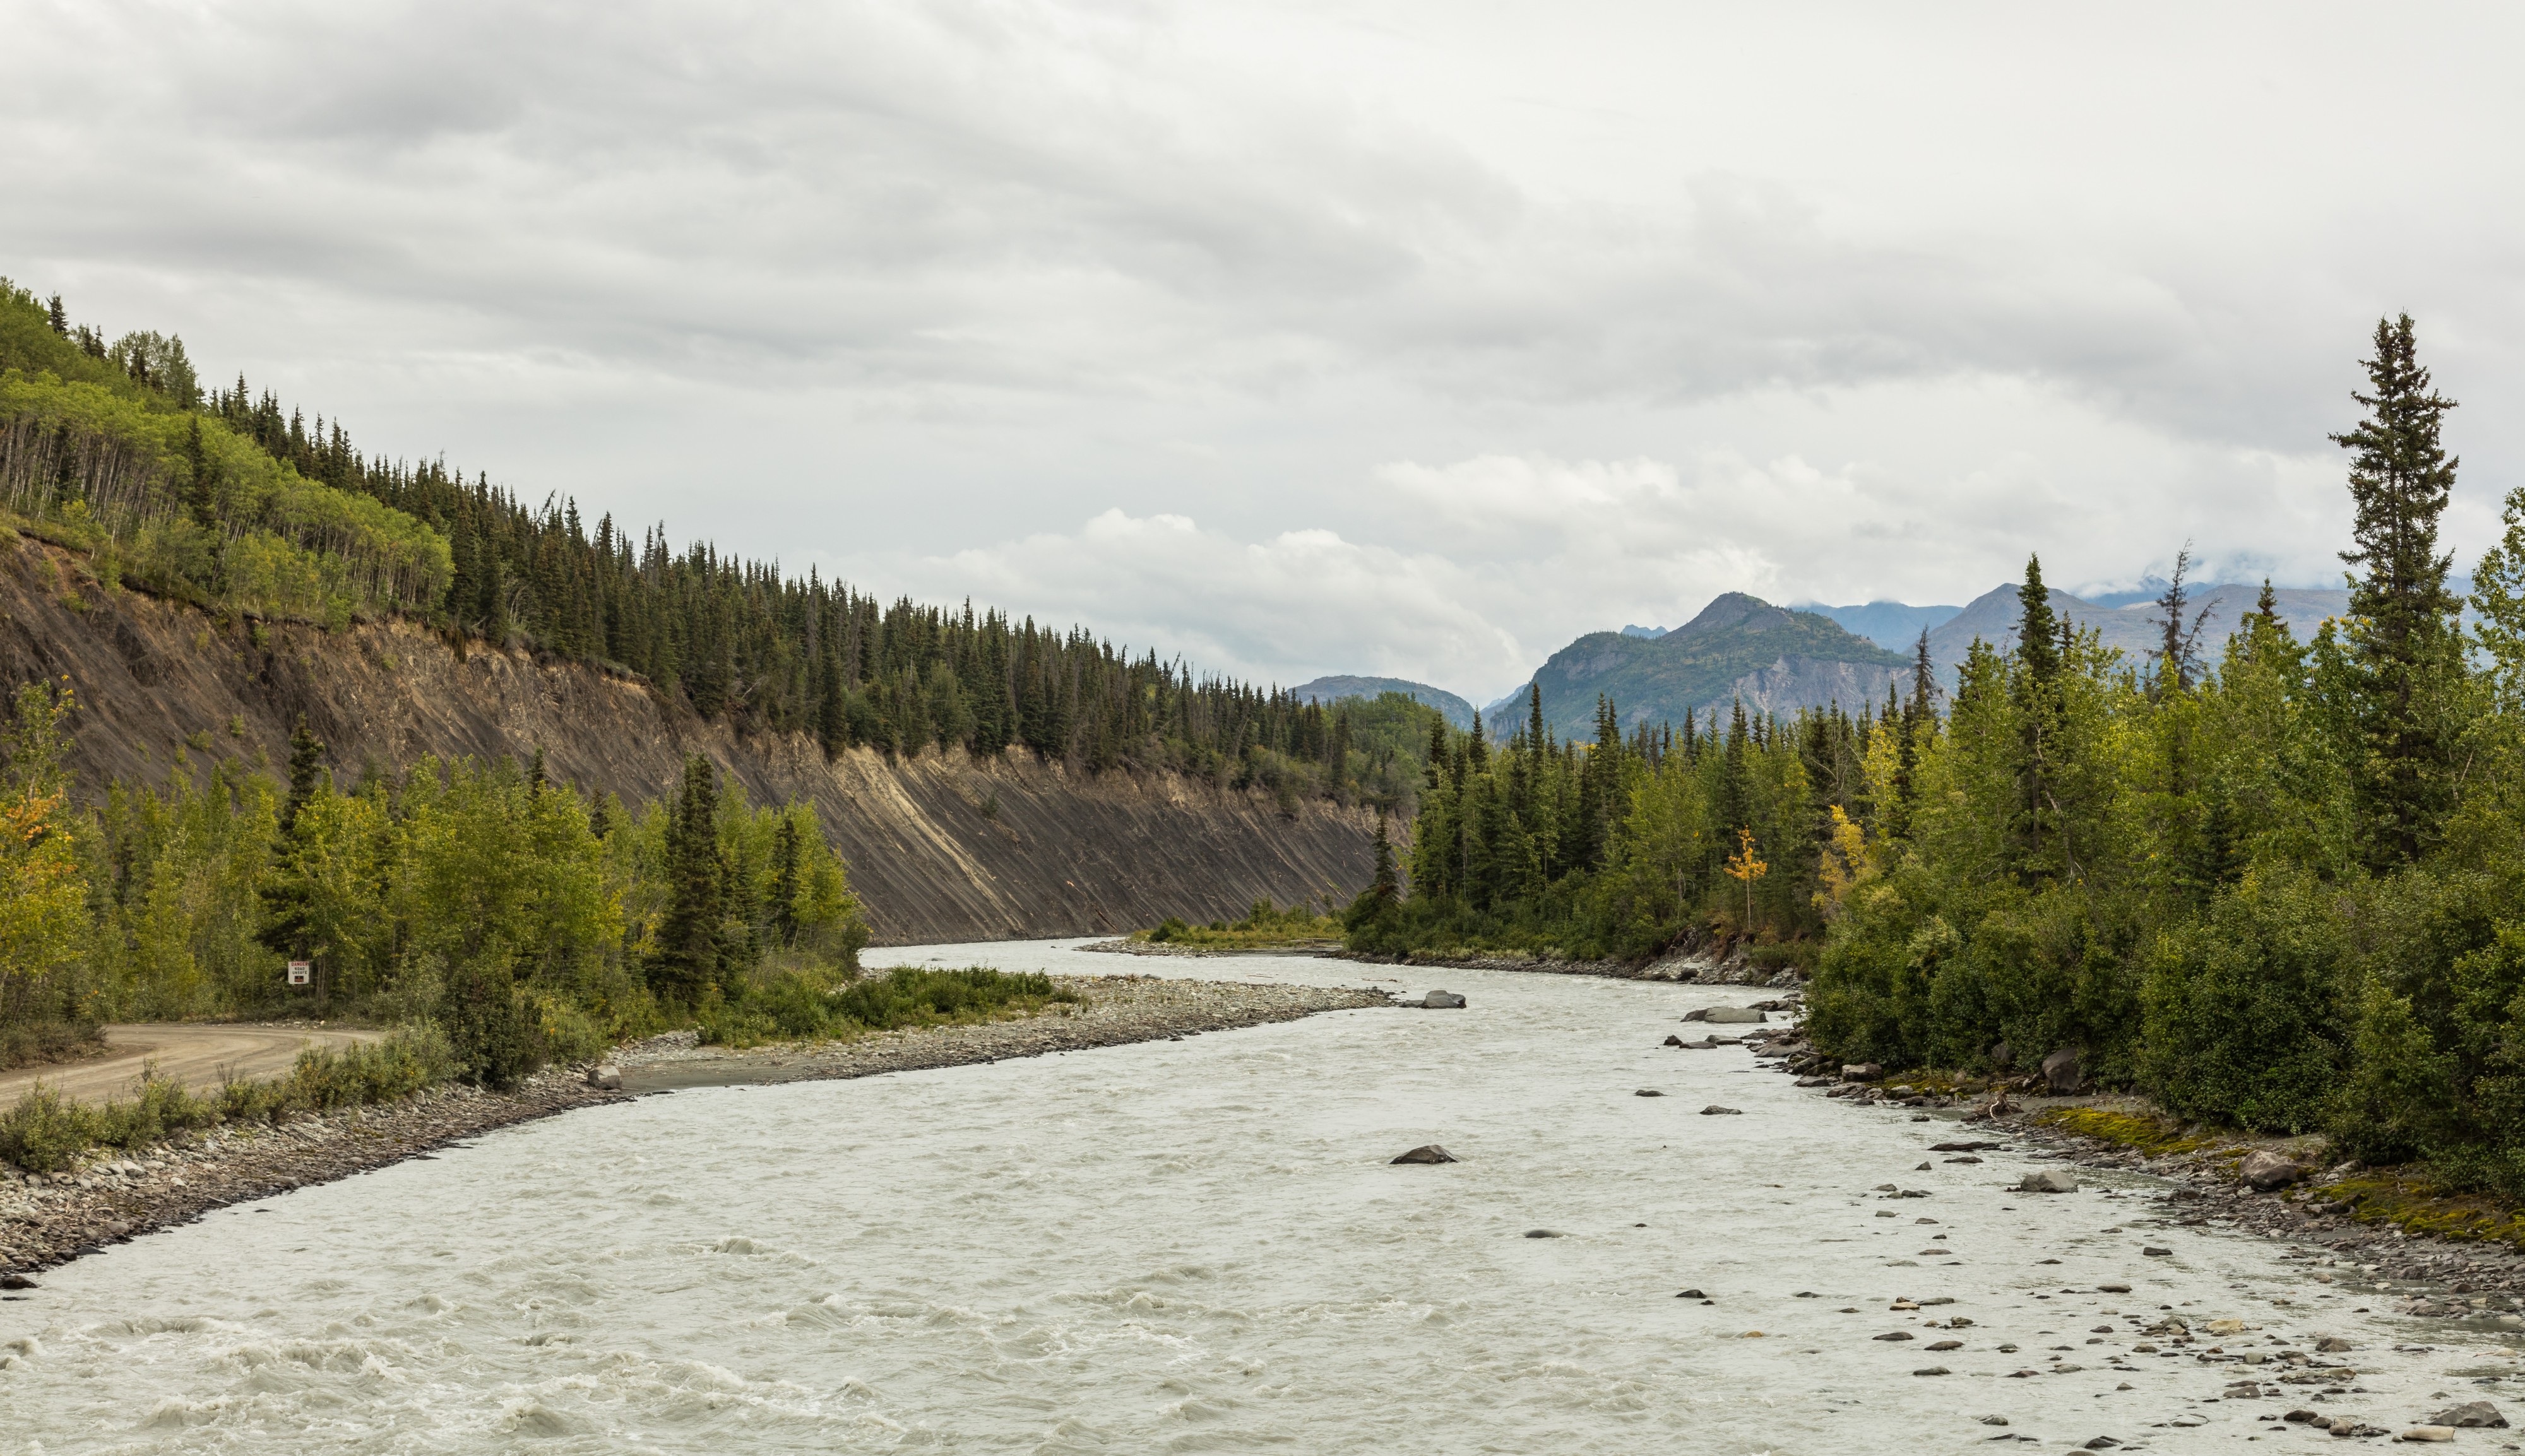 Río Matanuska, Alaska, Estados Unidos, 2017-08-22, DD 71